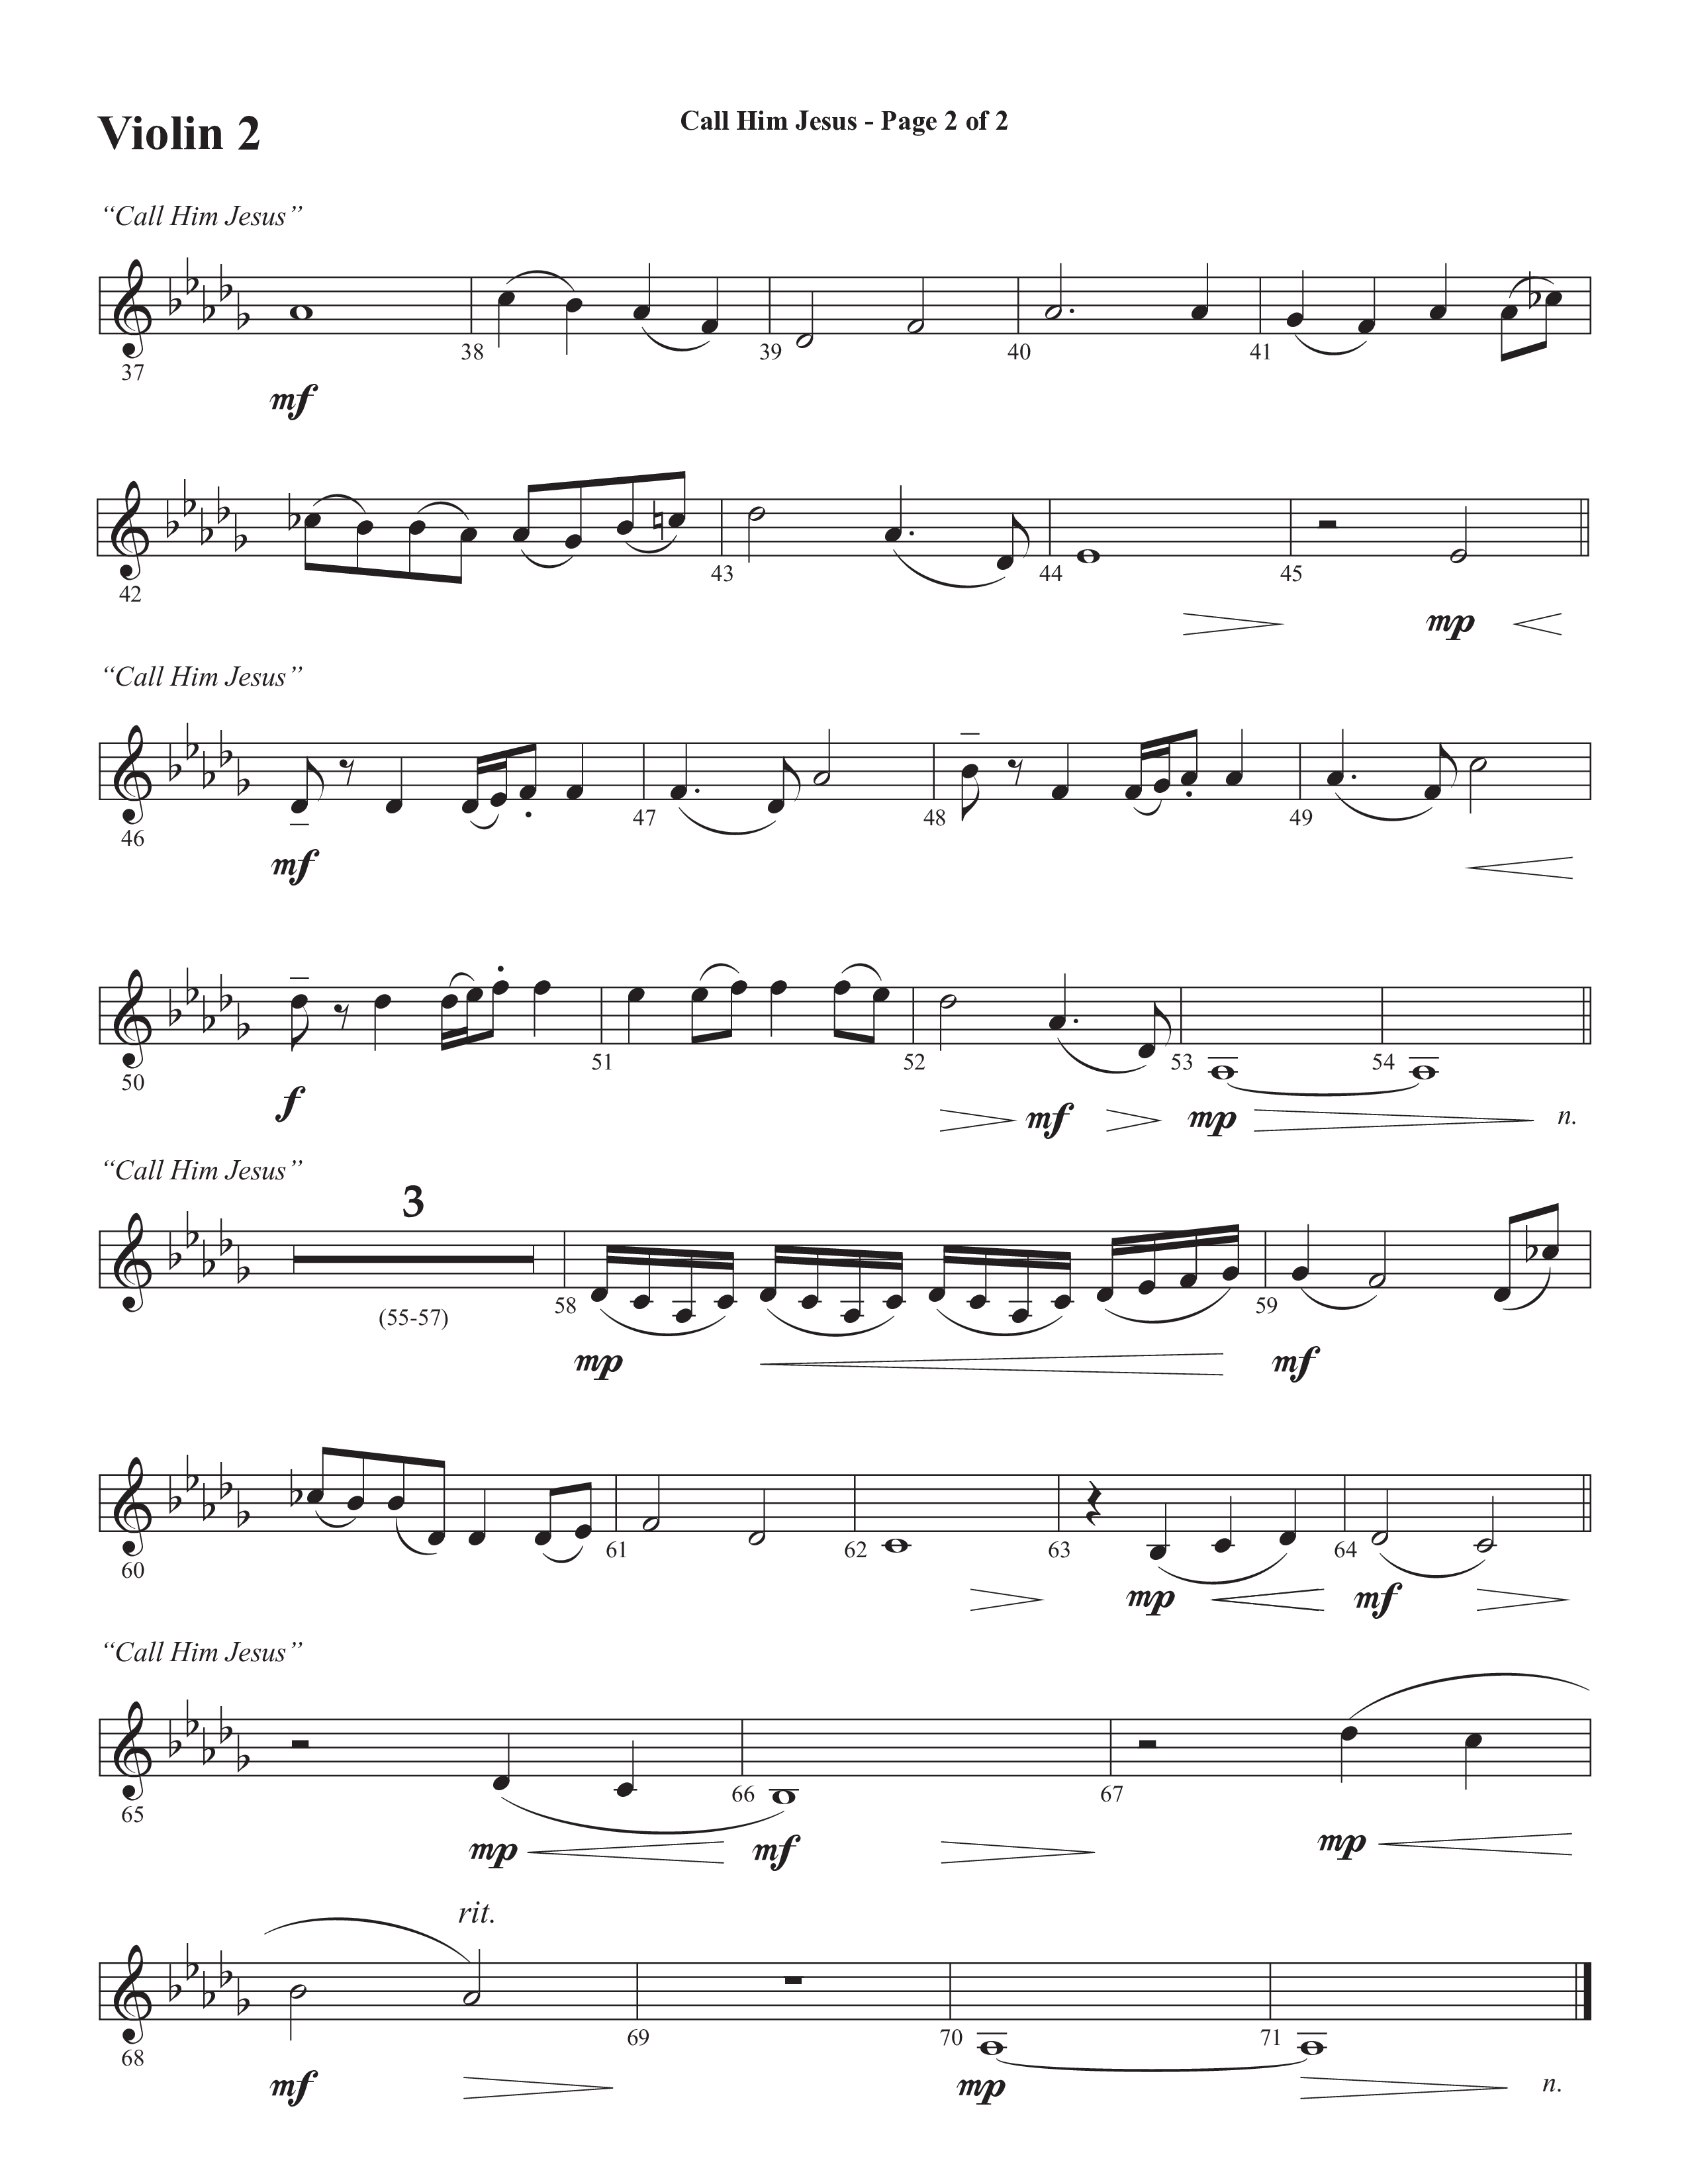 Call Him Jesus (Choral Anthem SATB) Violin 2 (Semsen Music / Arr. Daniel Semsen)